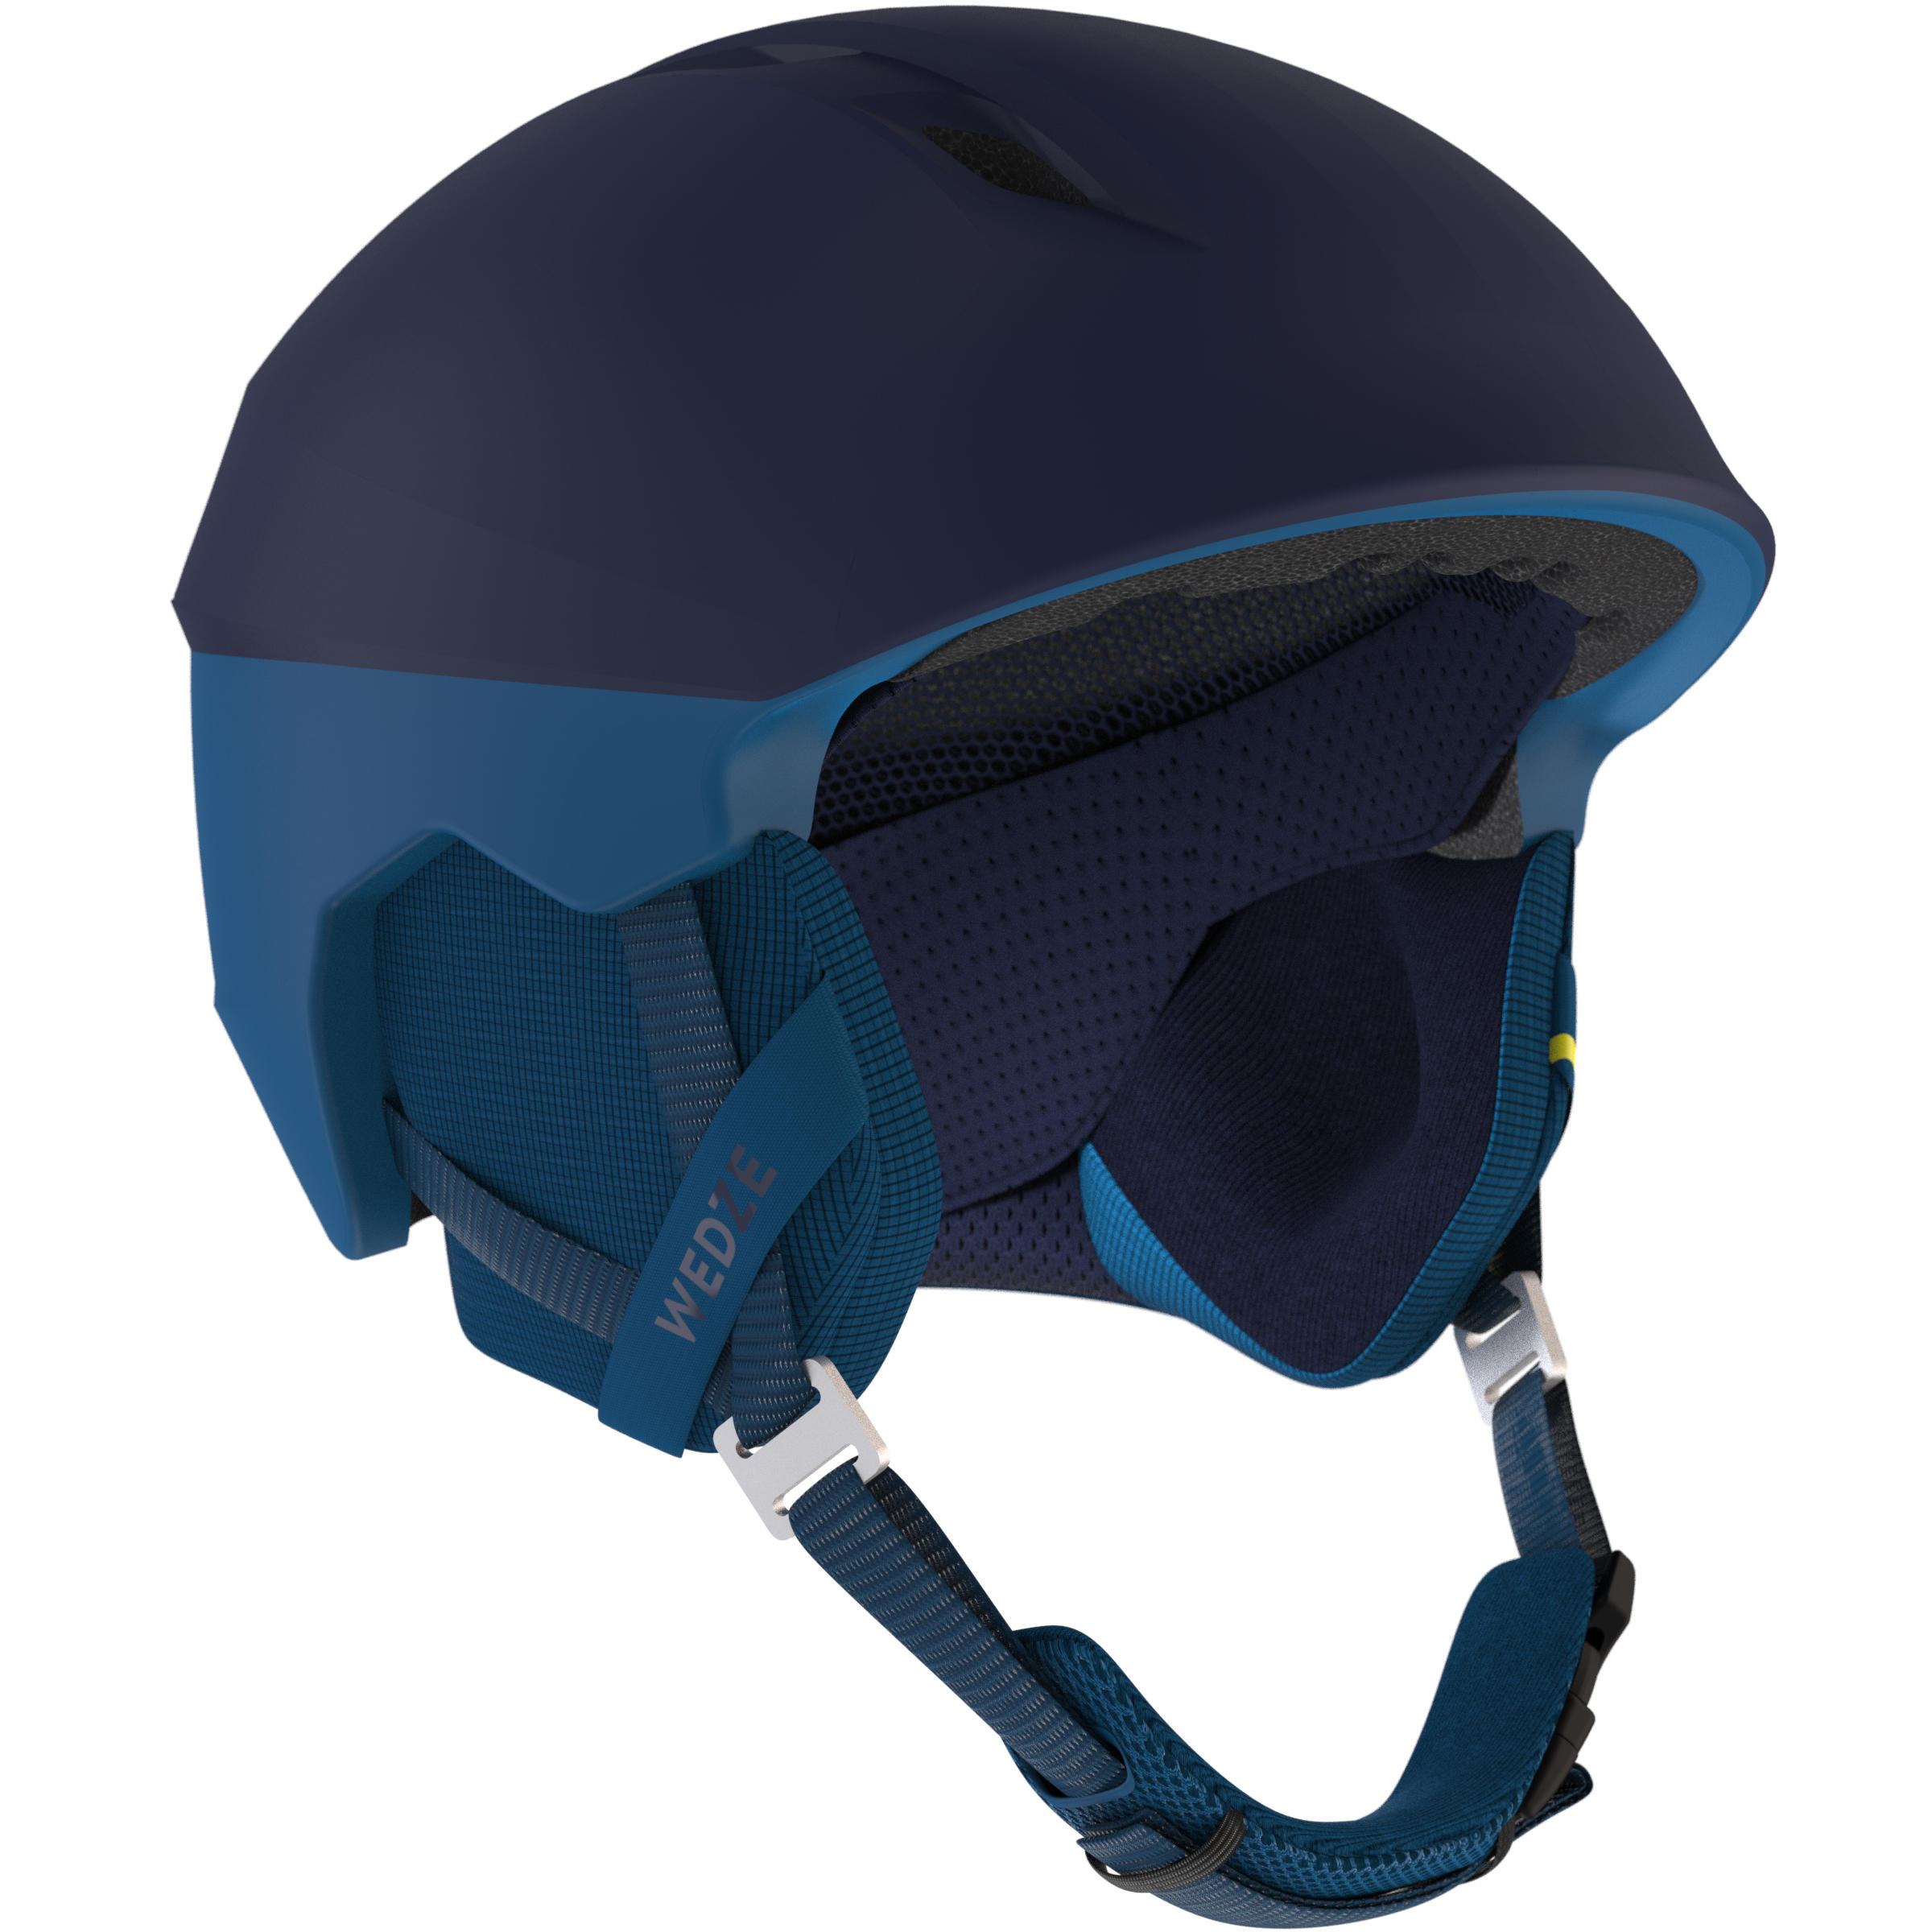 WEDZE Adult M Downhill Ski Helmet - Navy Blue